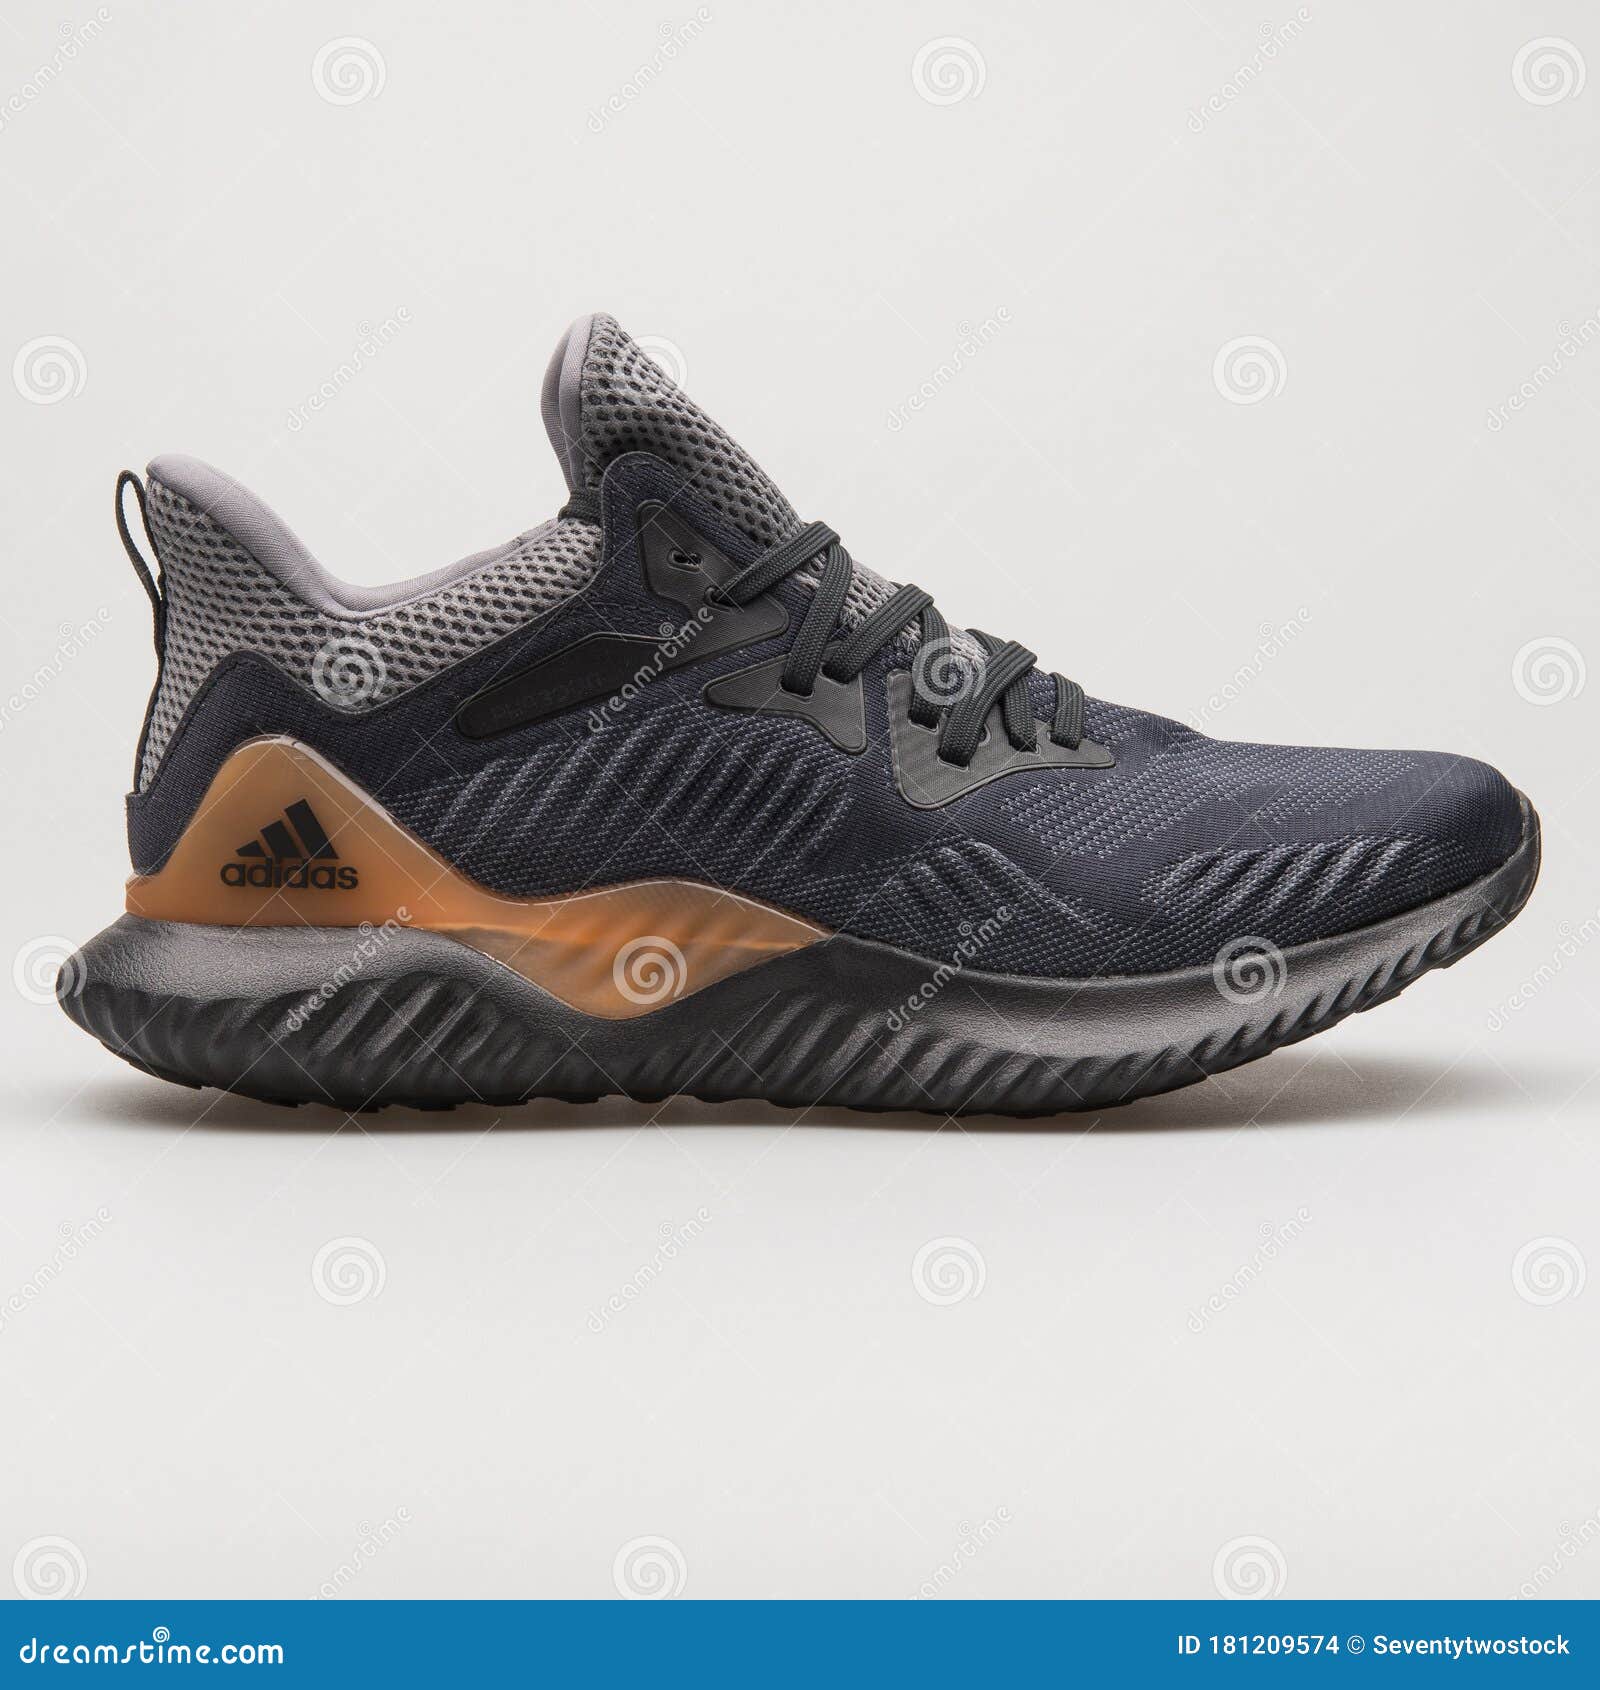 Adidas Alpha Bounce Beyond Obsidian and Grey Editorial Image - Image of kicks, 181209574